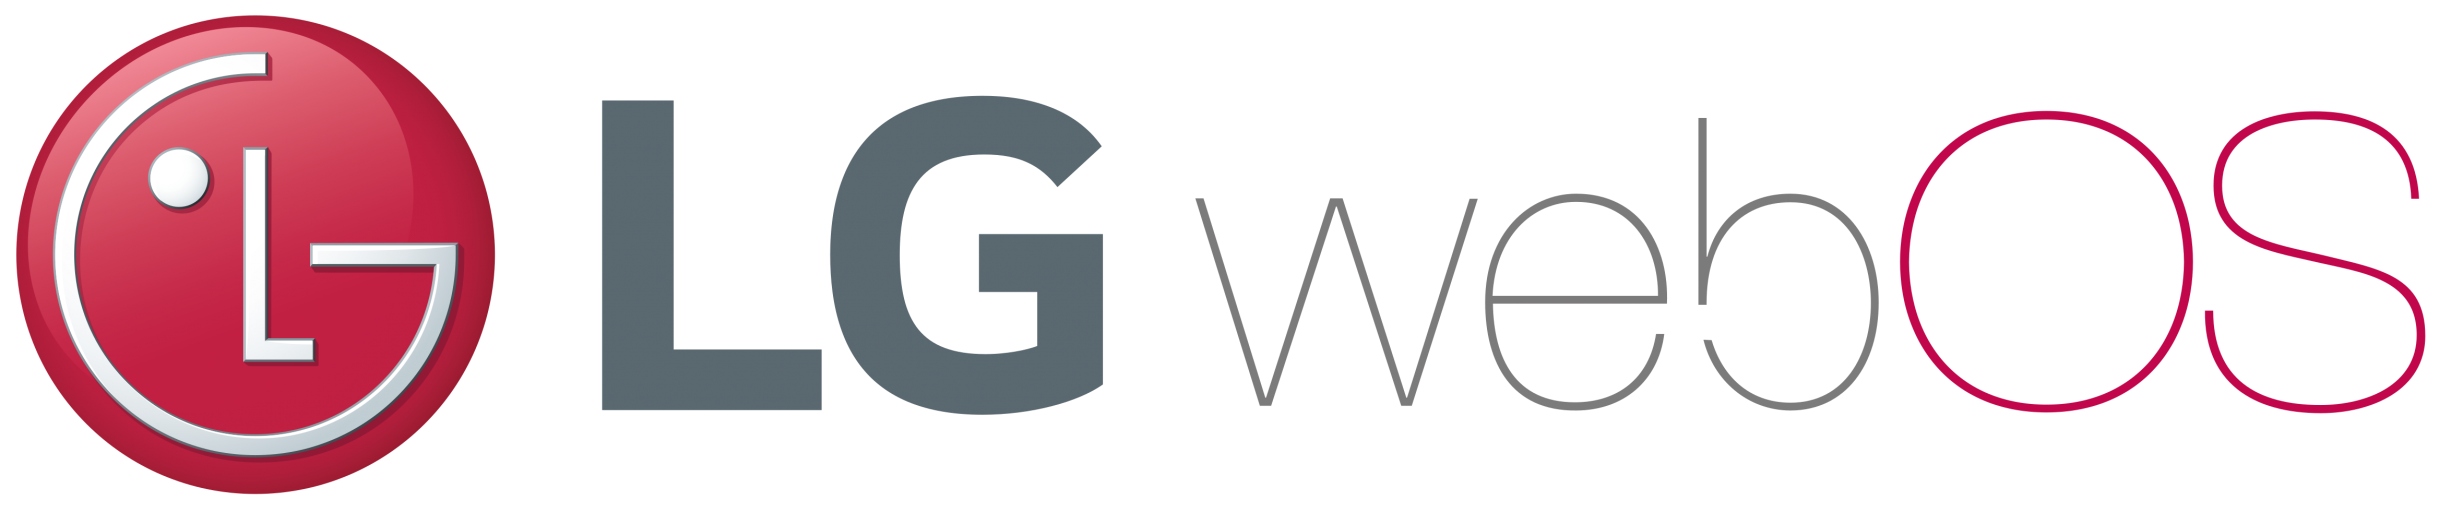 Lg телевизоры логотип. WEBOS логотип. Логотип LG смарт ТВ. LG Smart TV прозрачный логотип. LG телевизоры лого.